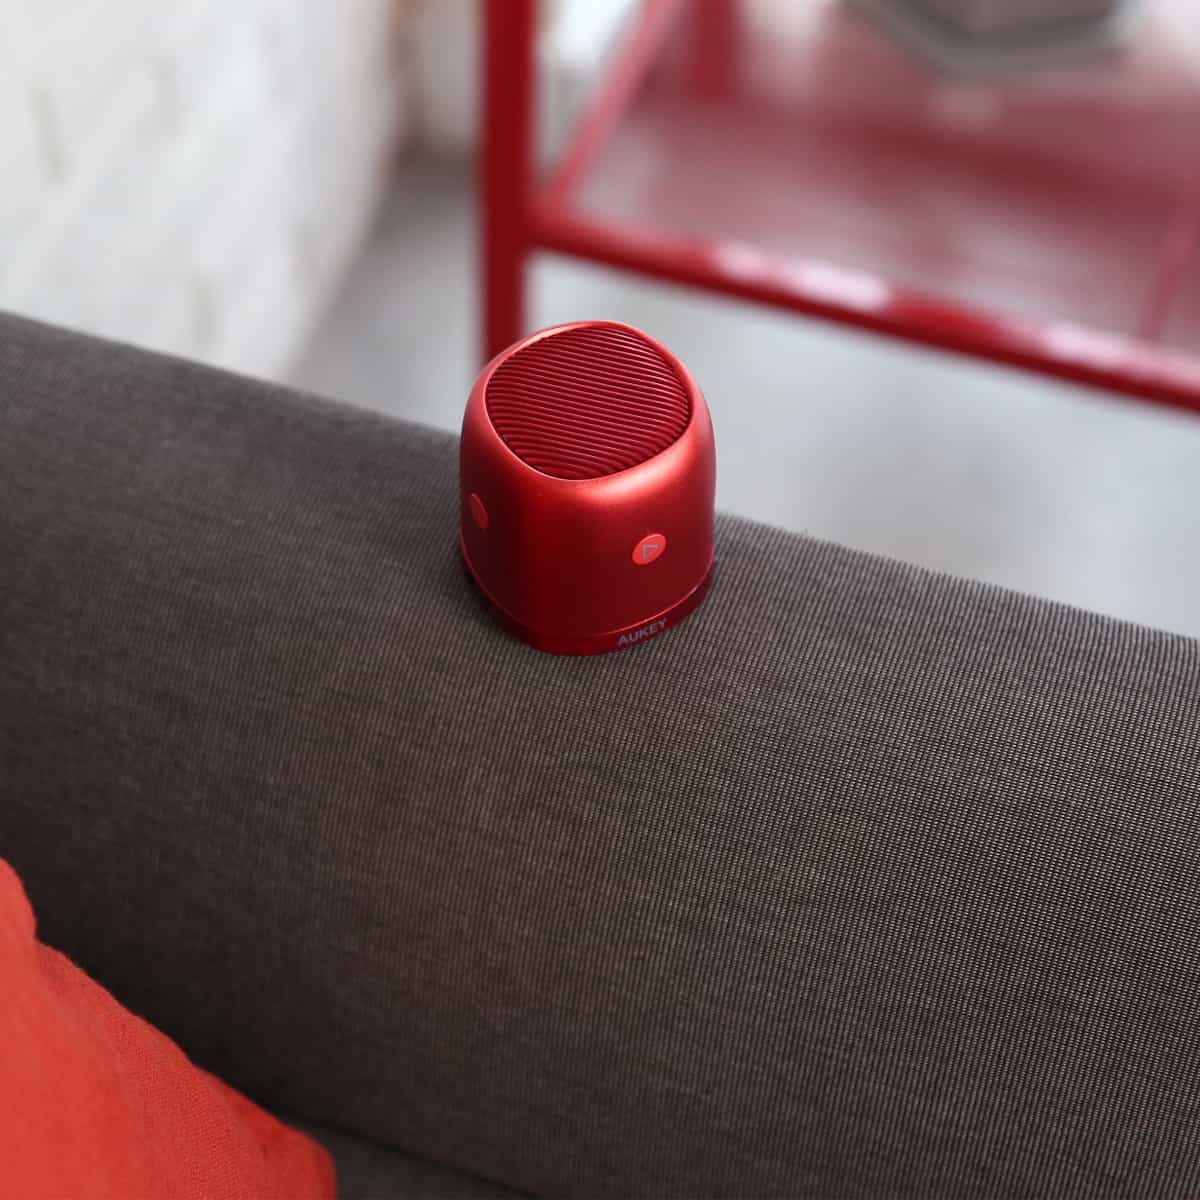 SK-M31 Wireless Mini Bluetooth Speaker with Enhanced Bass - Red